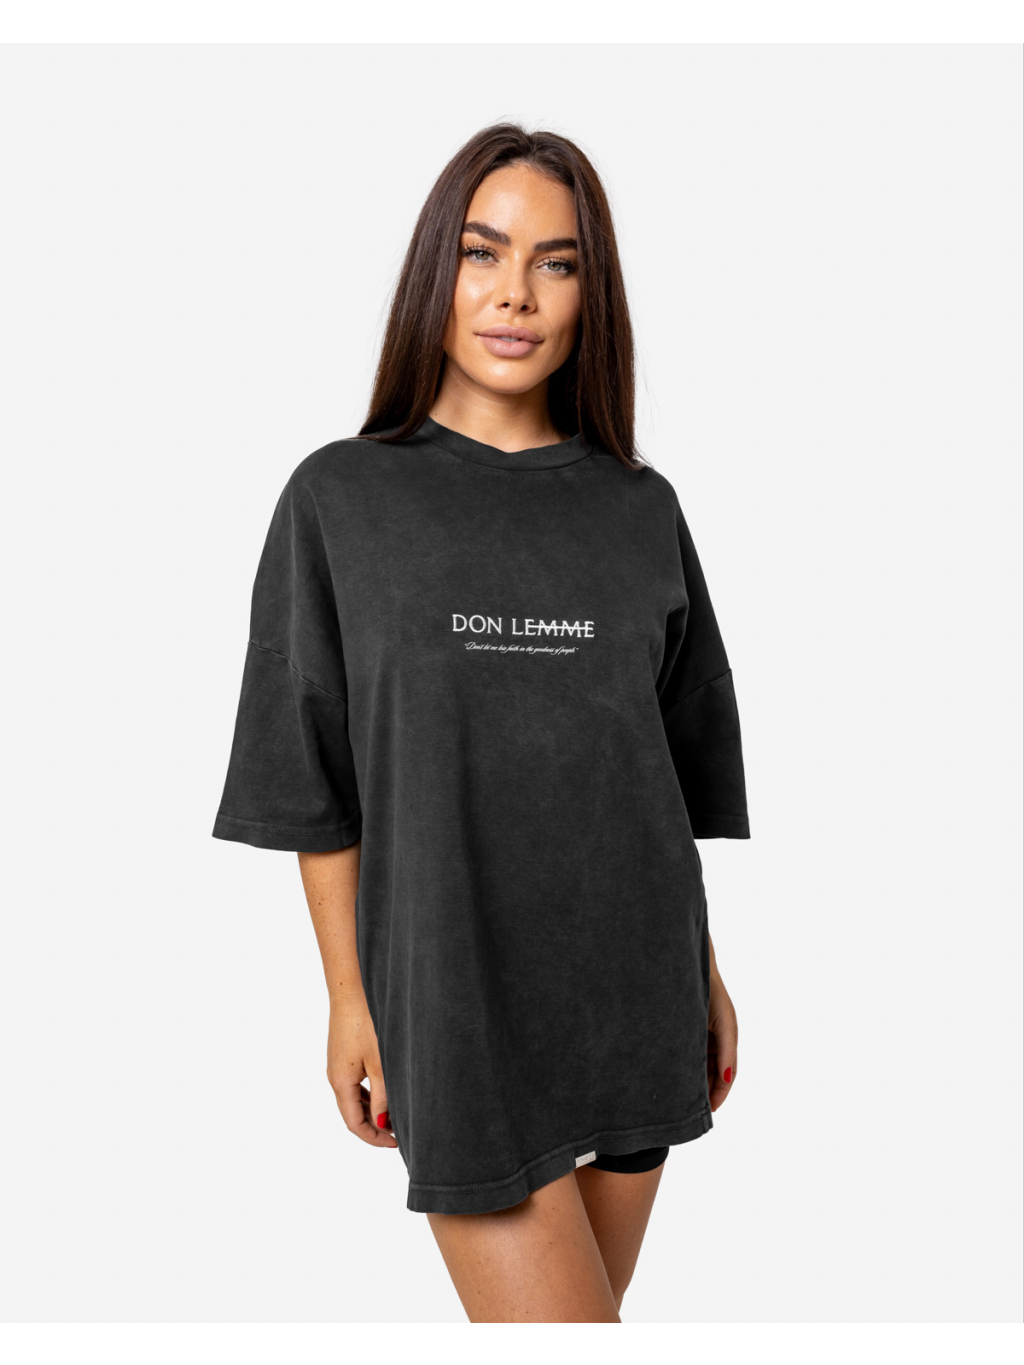 Unisex T-shirt Faith - vintage (Size XL)